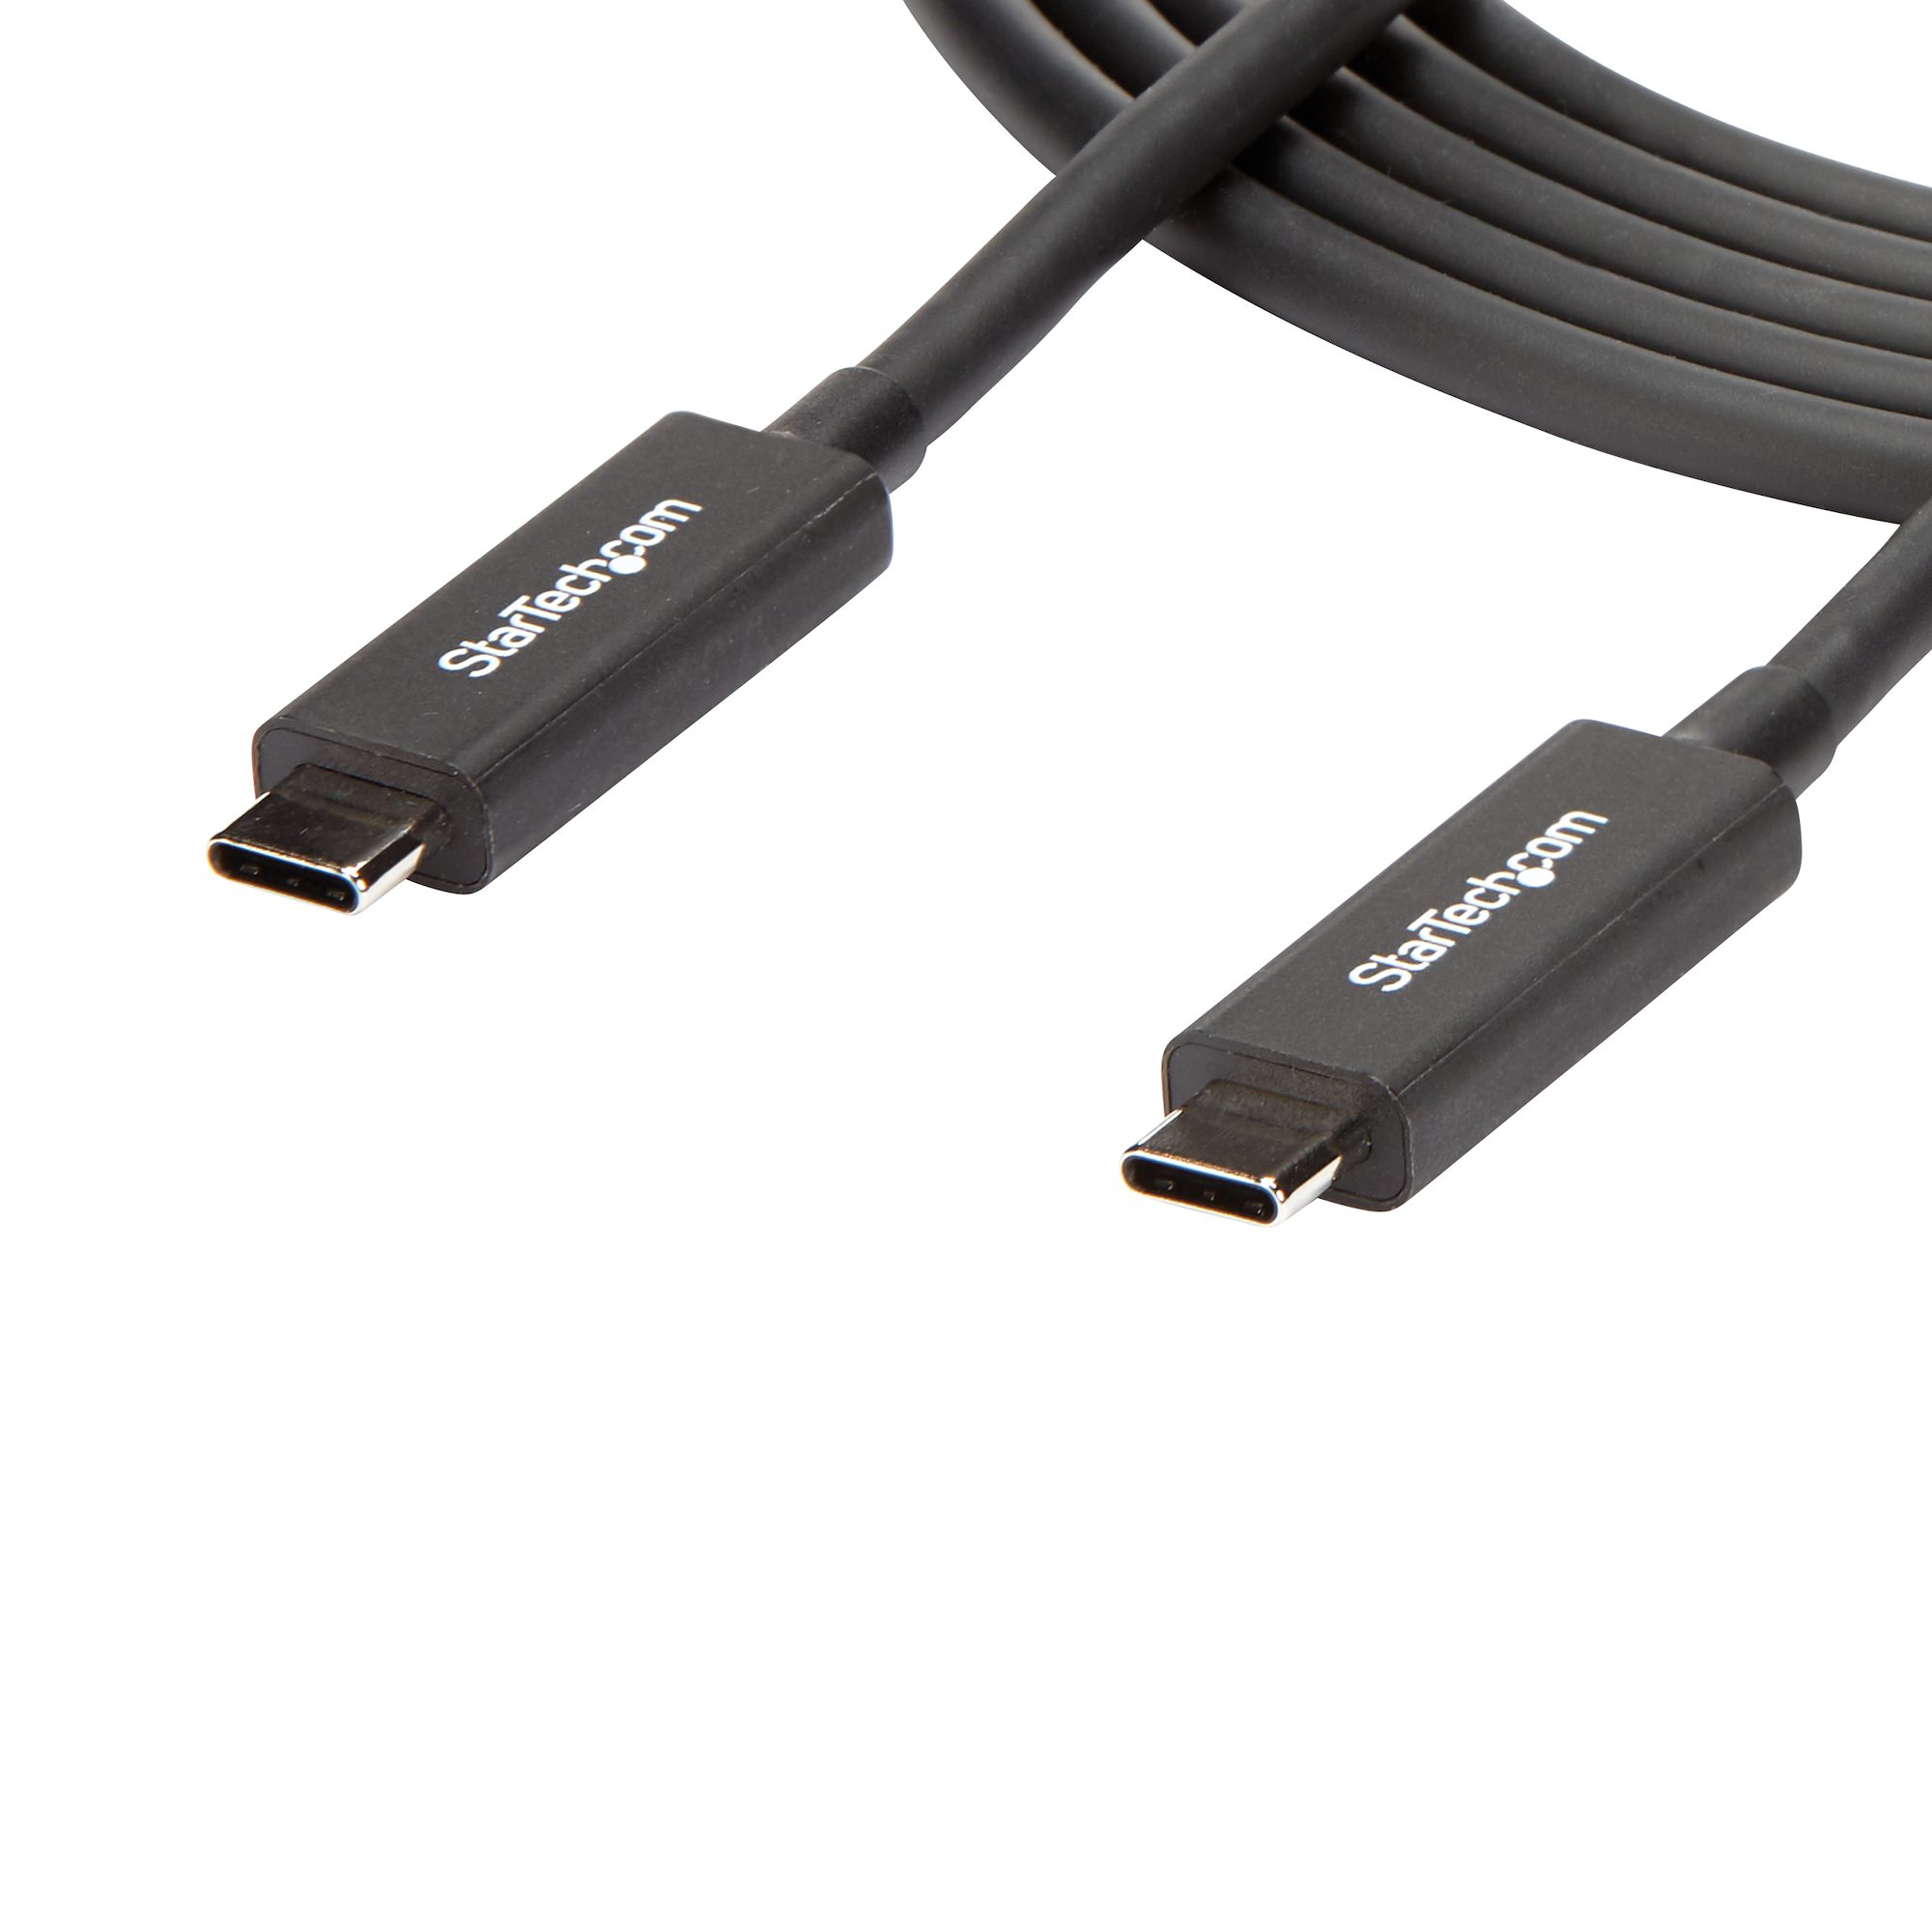 StarTech.com Thunderbolt 3 to Thunderbolt 2 Adapter USB C to Mini